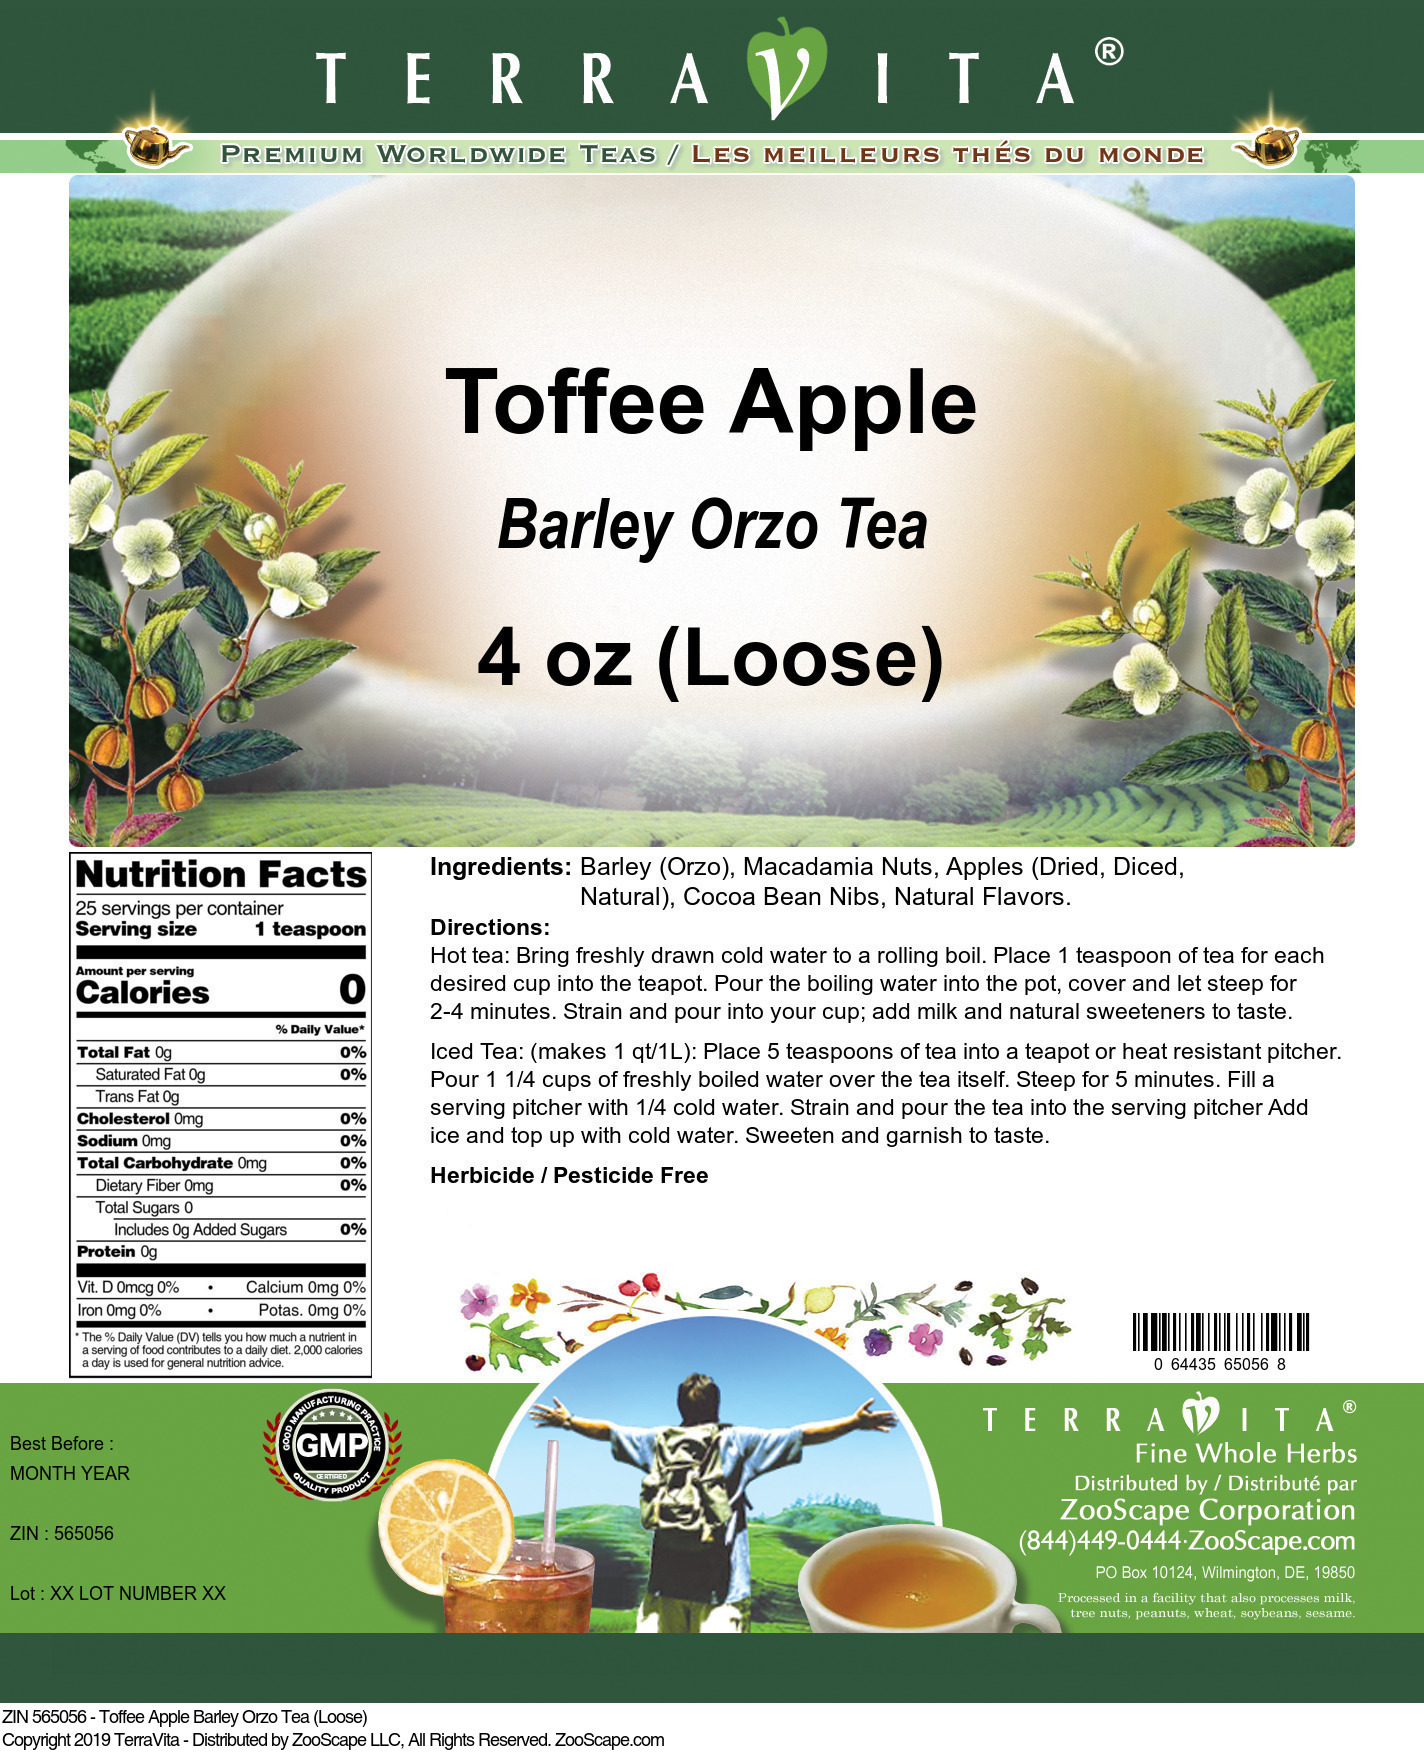 Toffee Apple Barley Orzo Tea (Loose) - Label